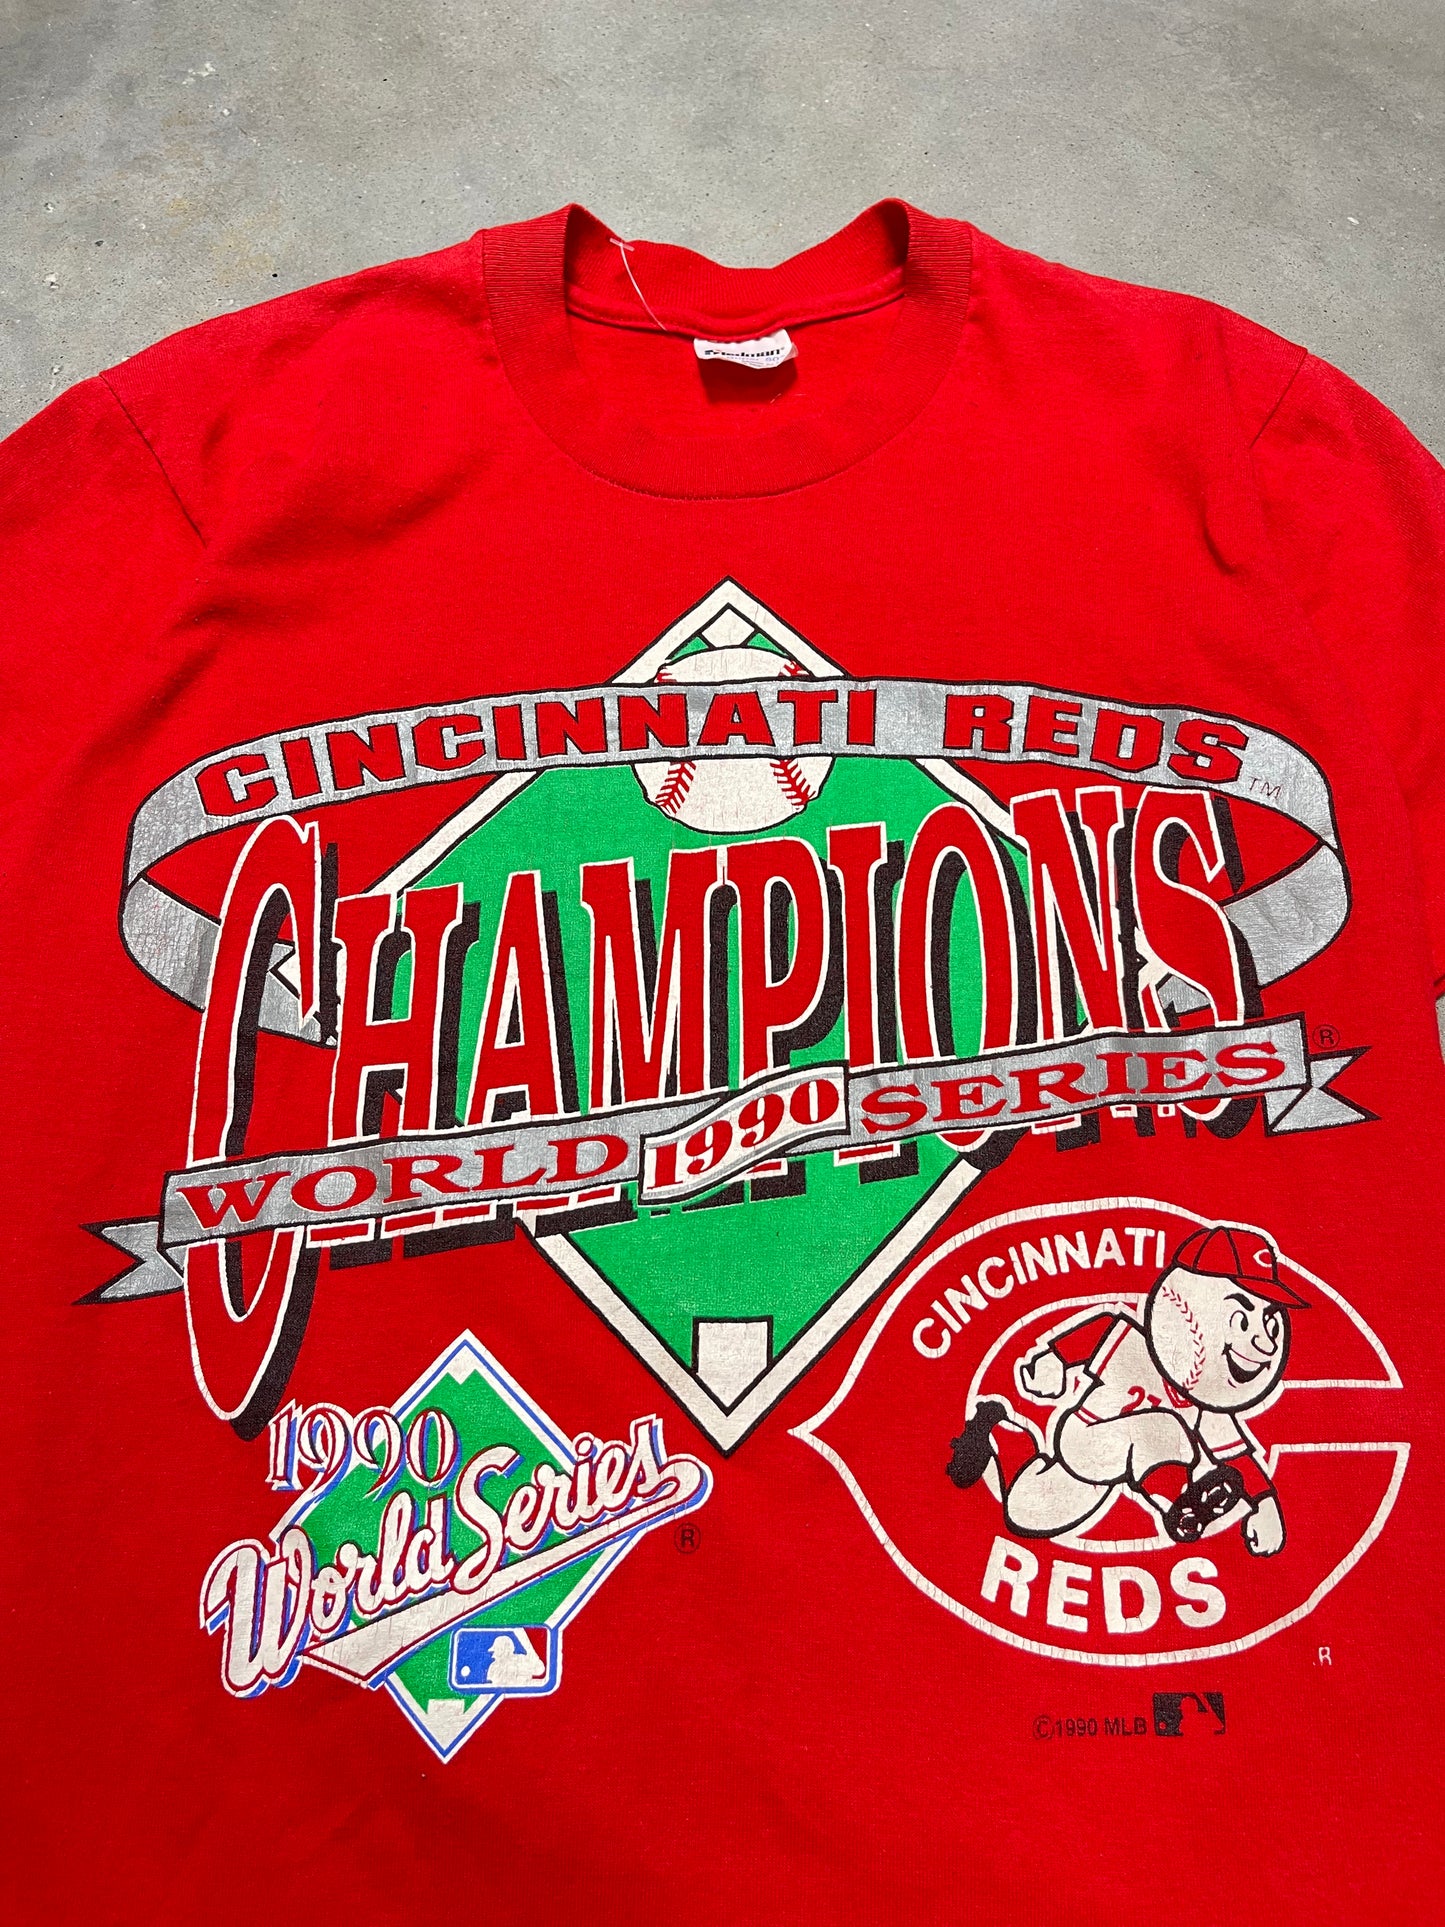 1990 Cincinnati Reds World Series Champions Vintage MLB Tee (Small)